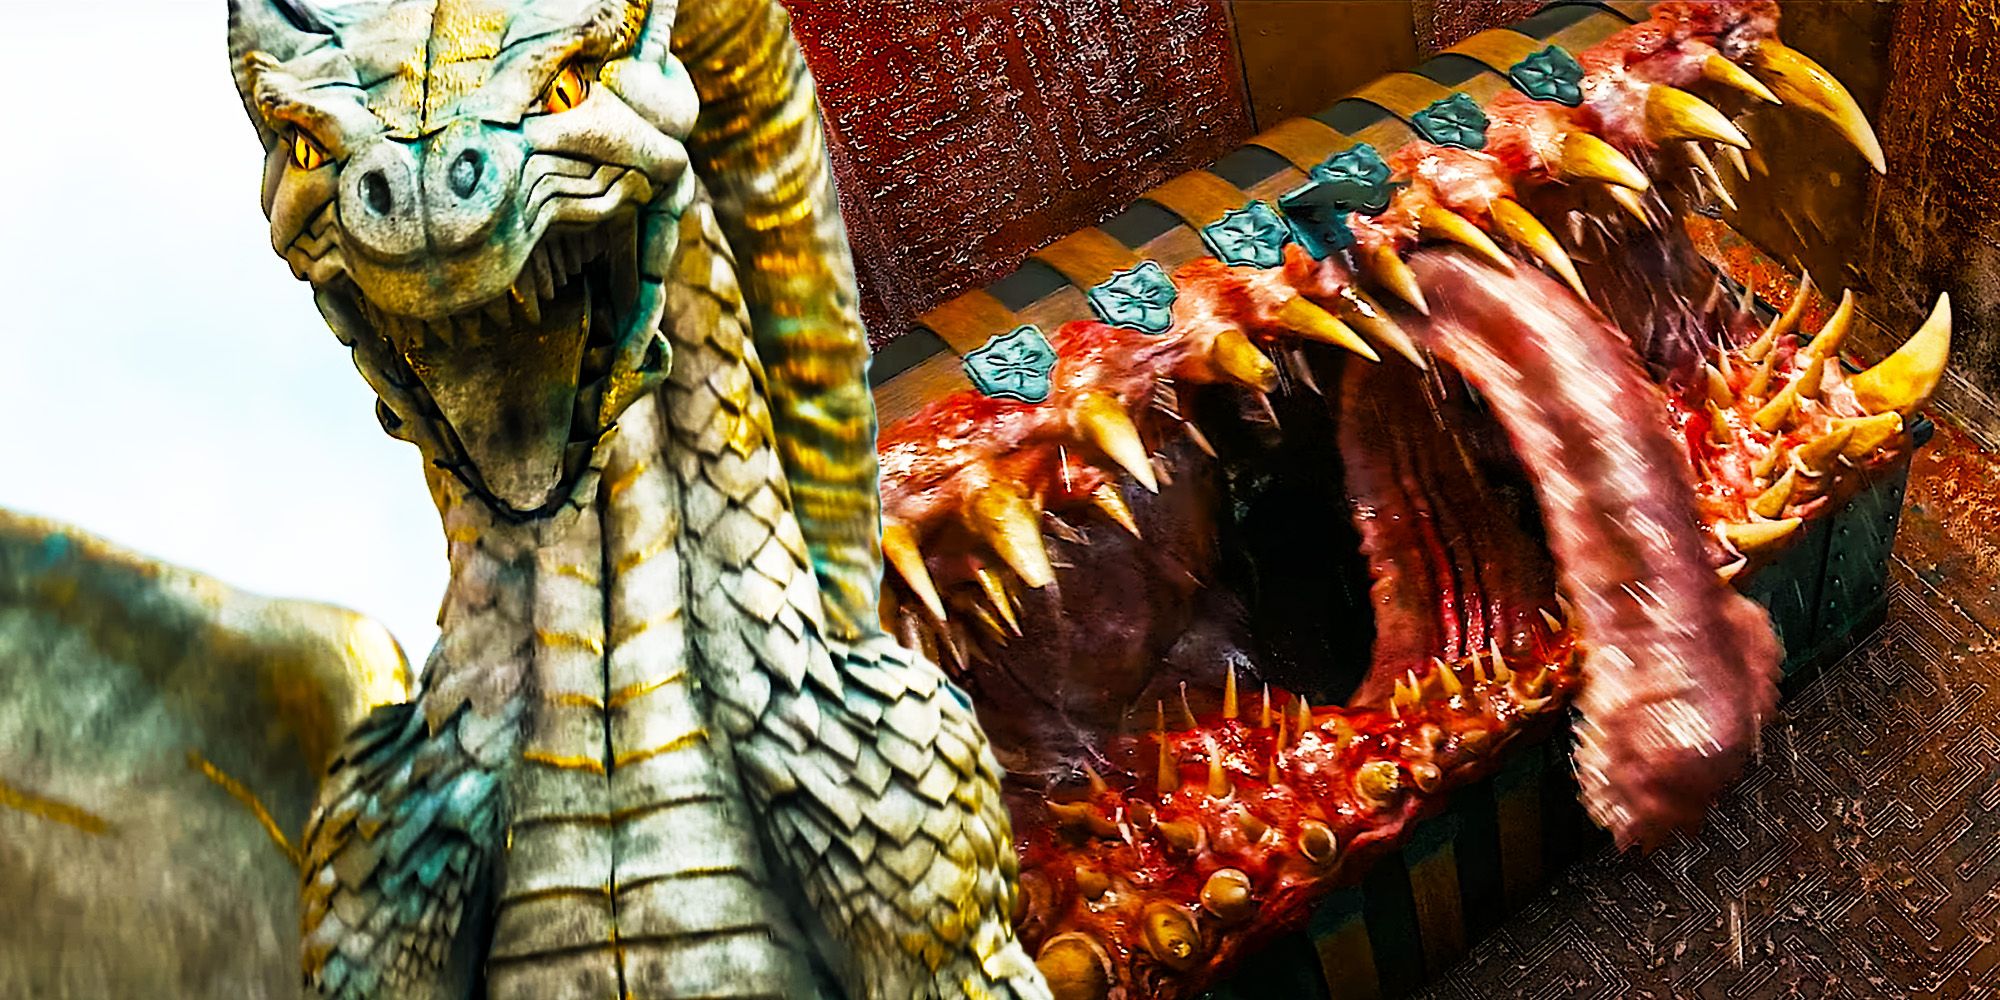 Dungeons & Dragons – Monstros e Criaturas - Excelsior